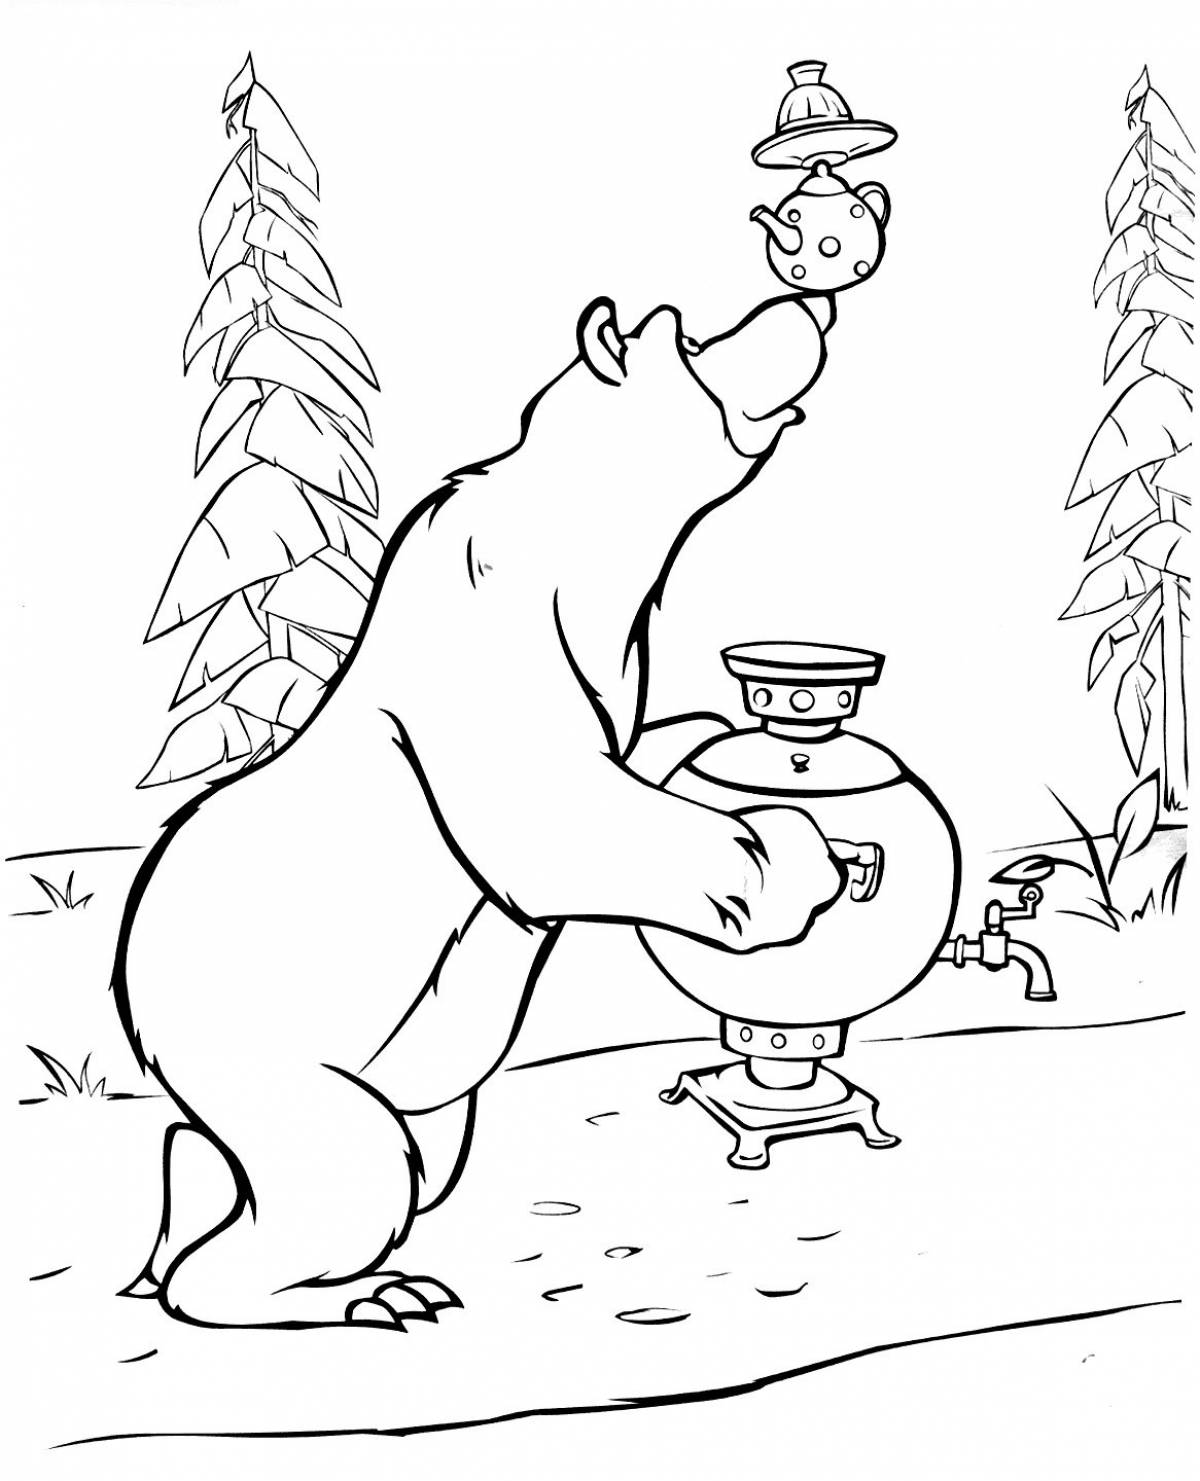 Bear and samovar coloring page